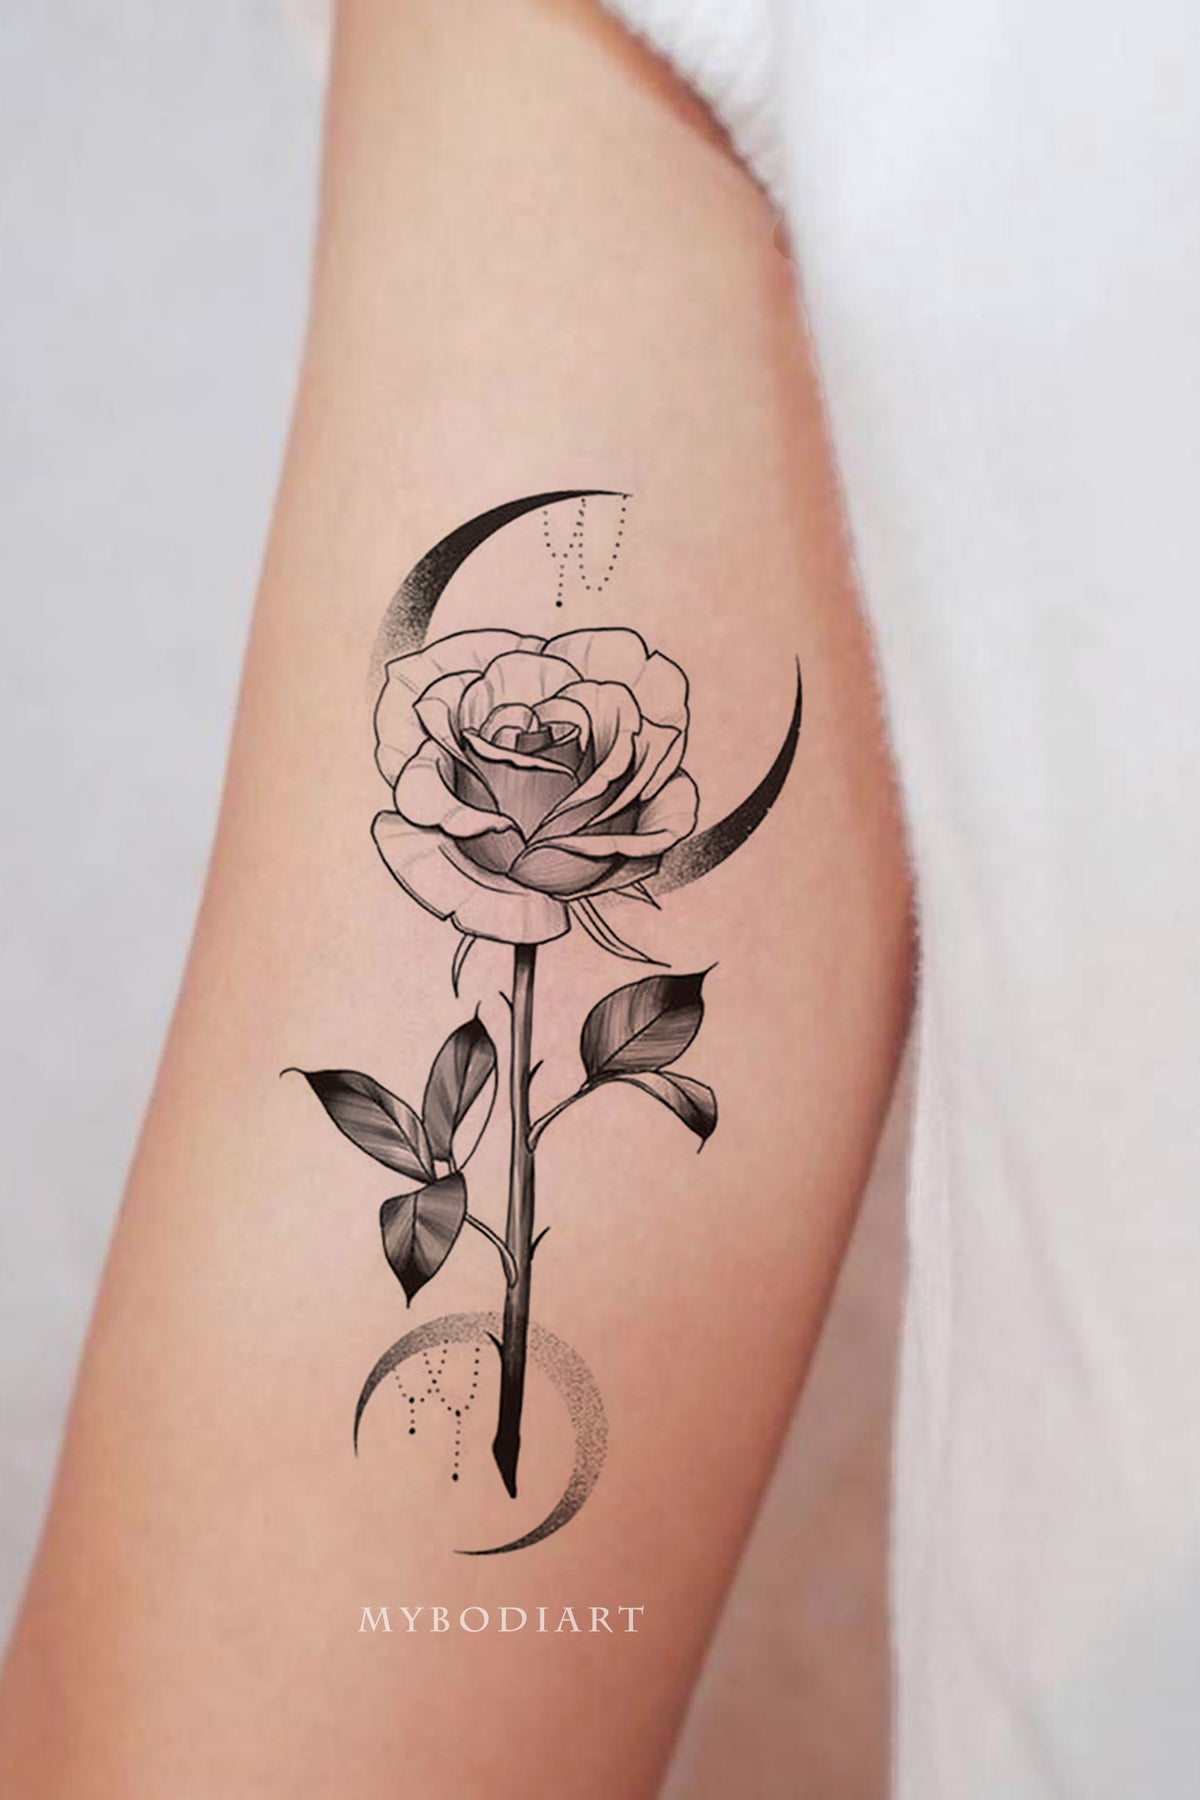 Single needle rose tattoo on the left inner forearm